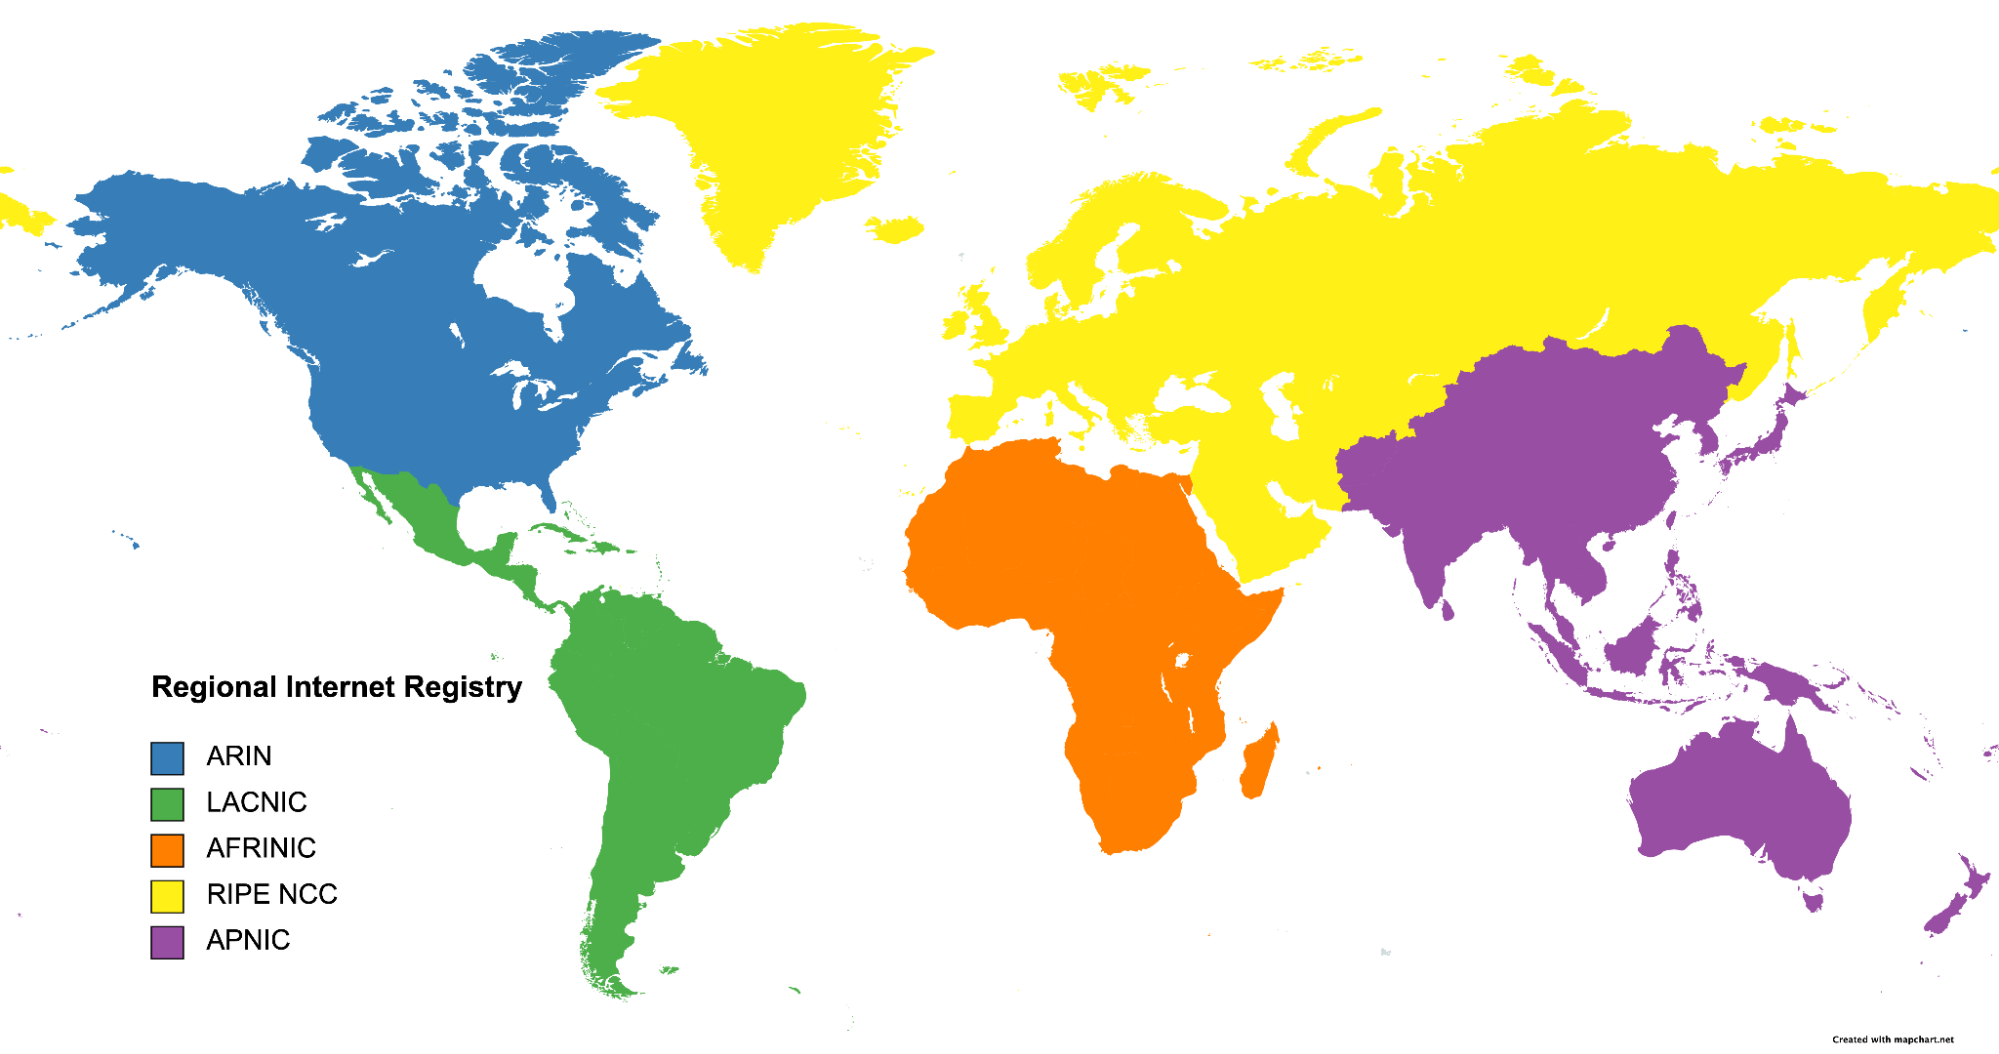 The Regional Internet Registries and their Regions